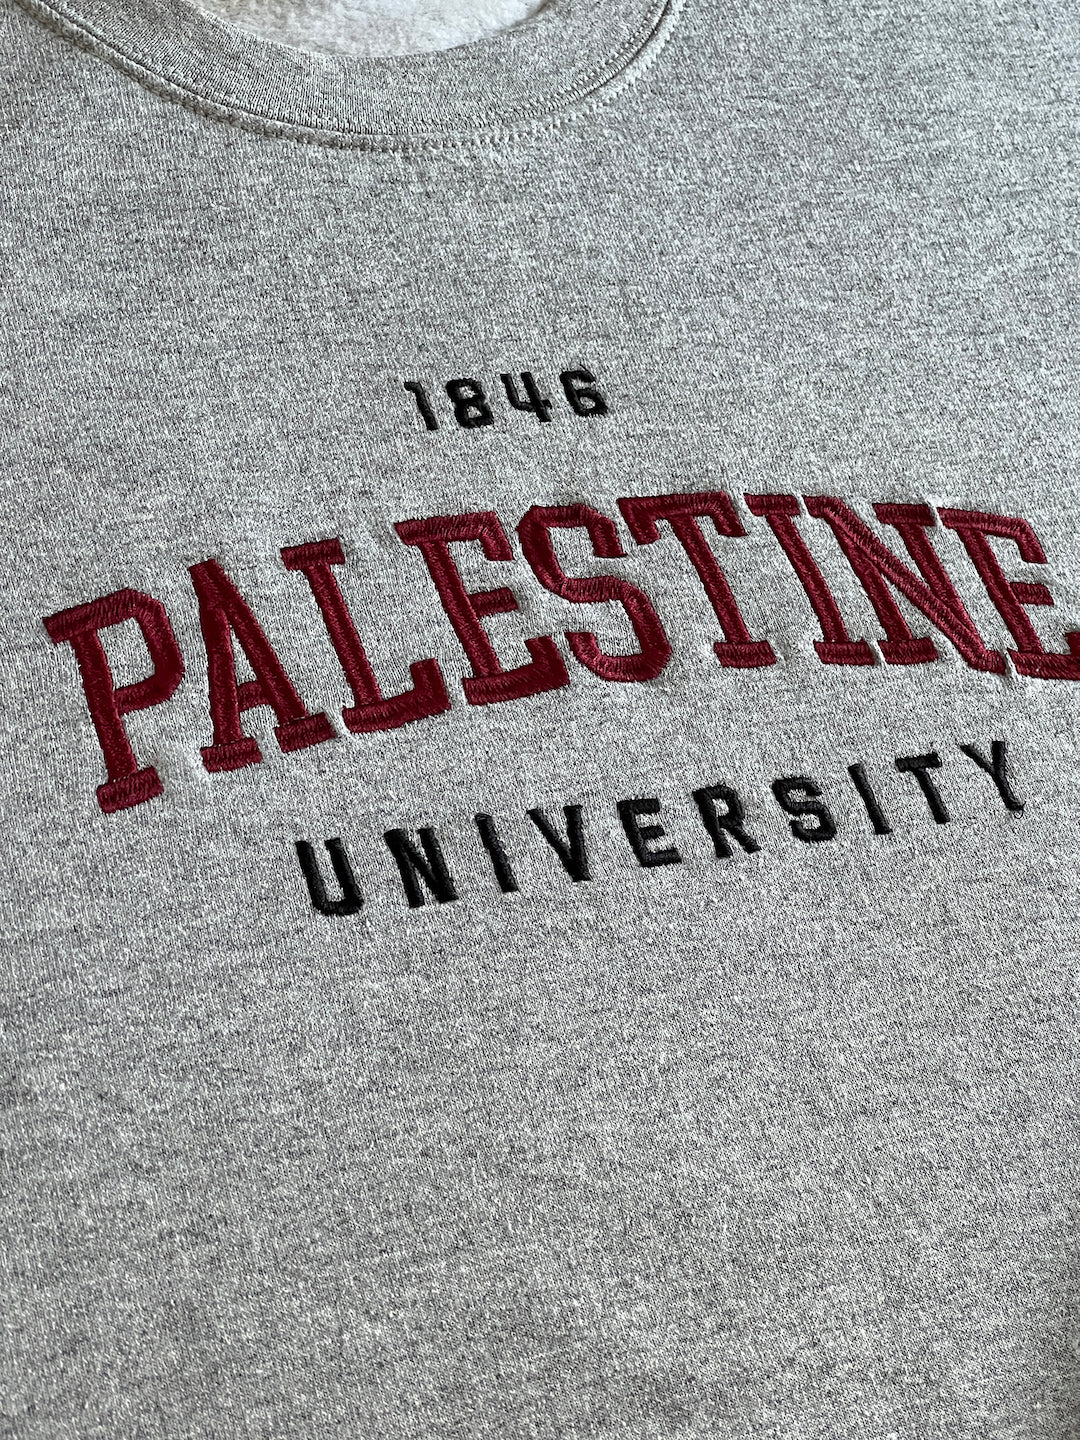 Palestine University 1846 - Sweatshirt